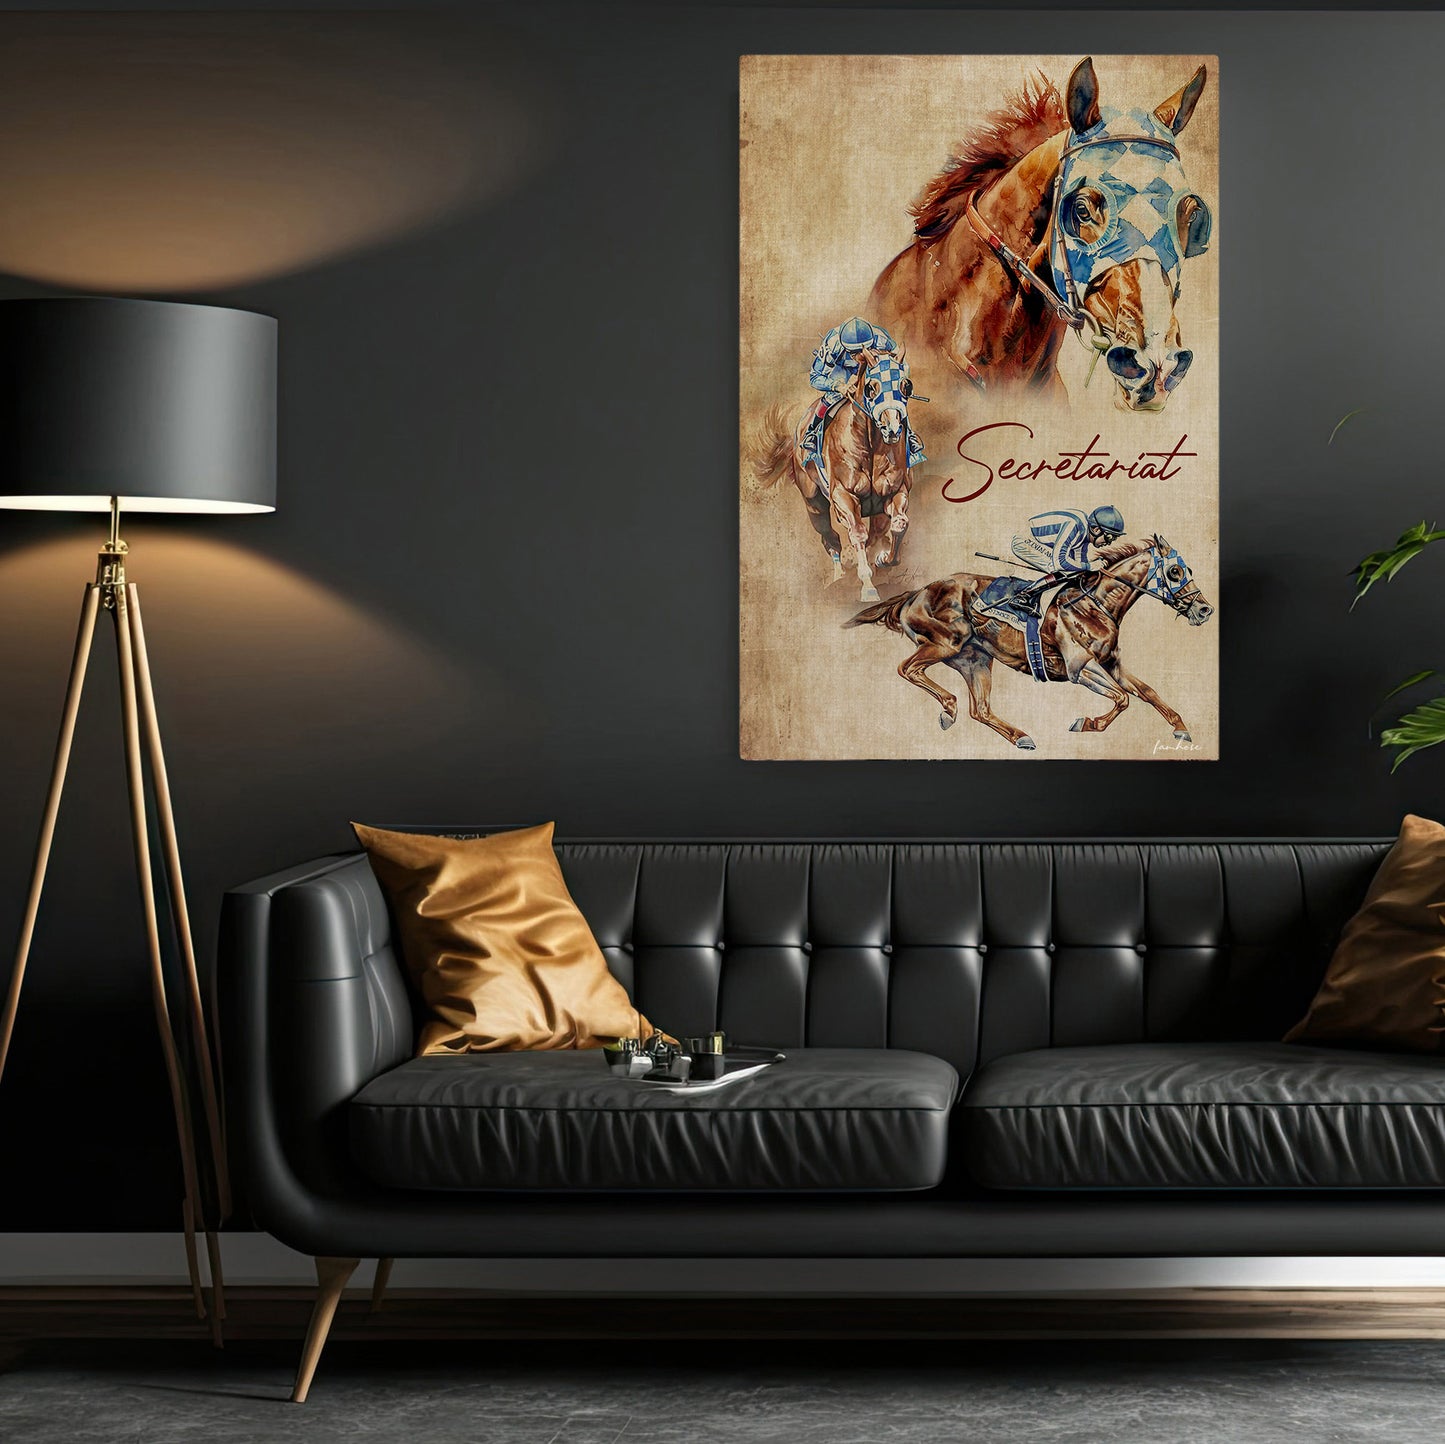 Secretariat Canvas Painting, Jockey Wall Art Decor, Poster Gift For Horse Racing Lovers